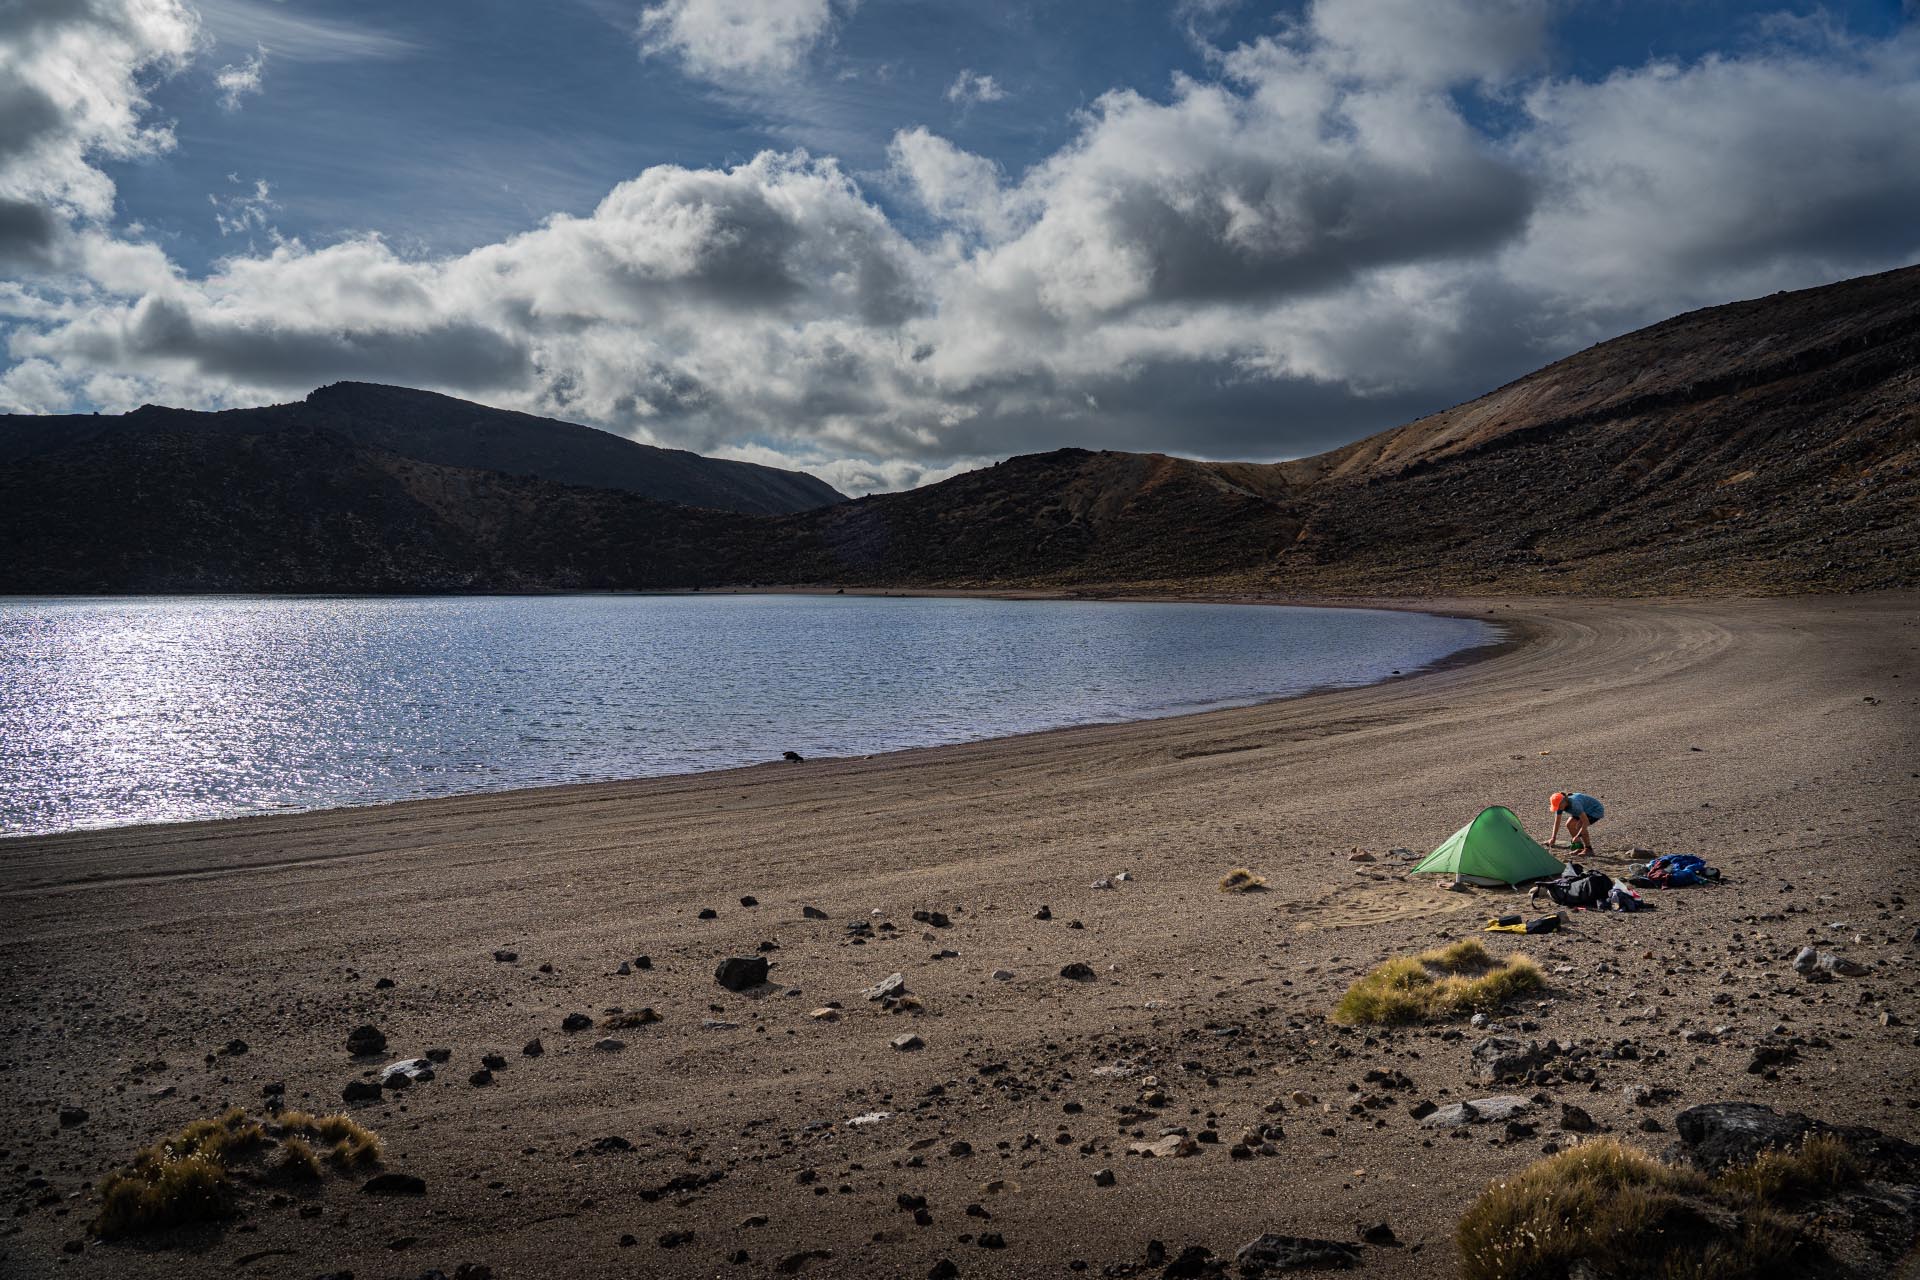 Camping on the shore of Blue Lake, Mt Tongariro.